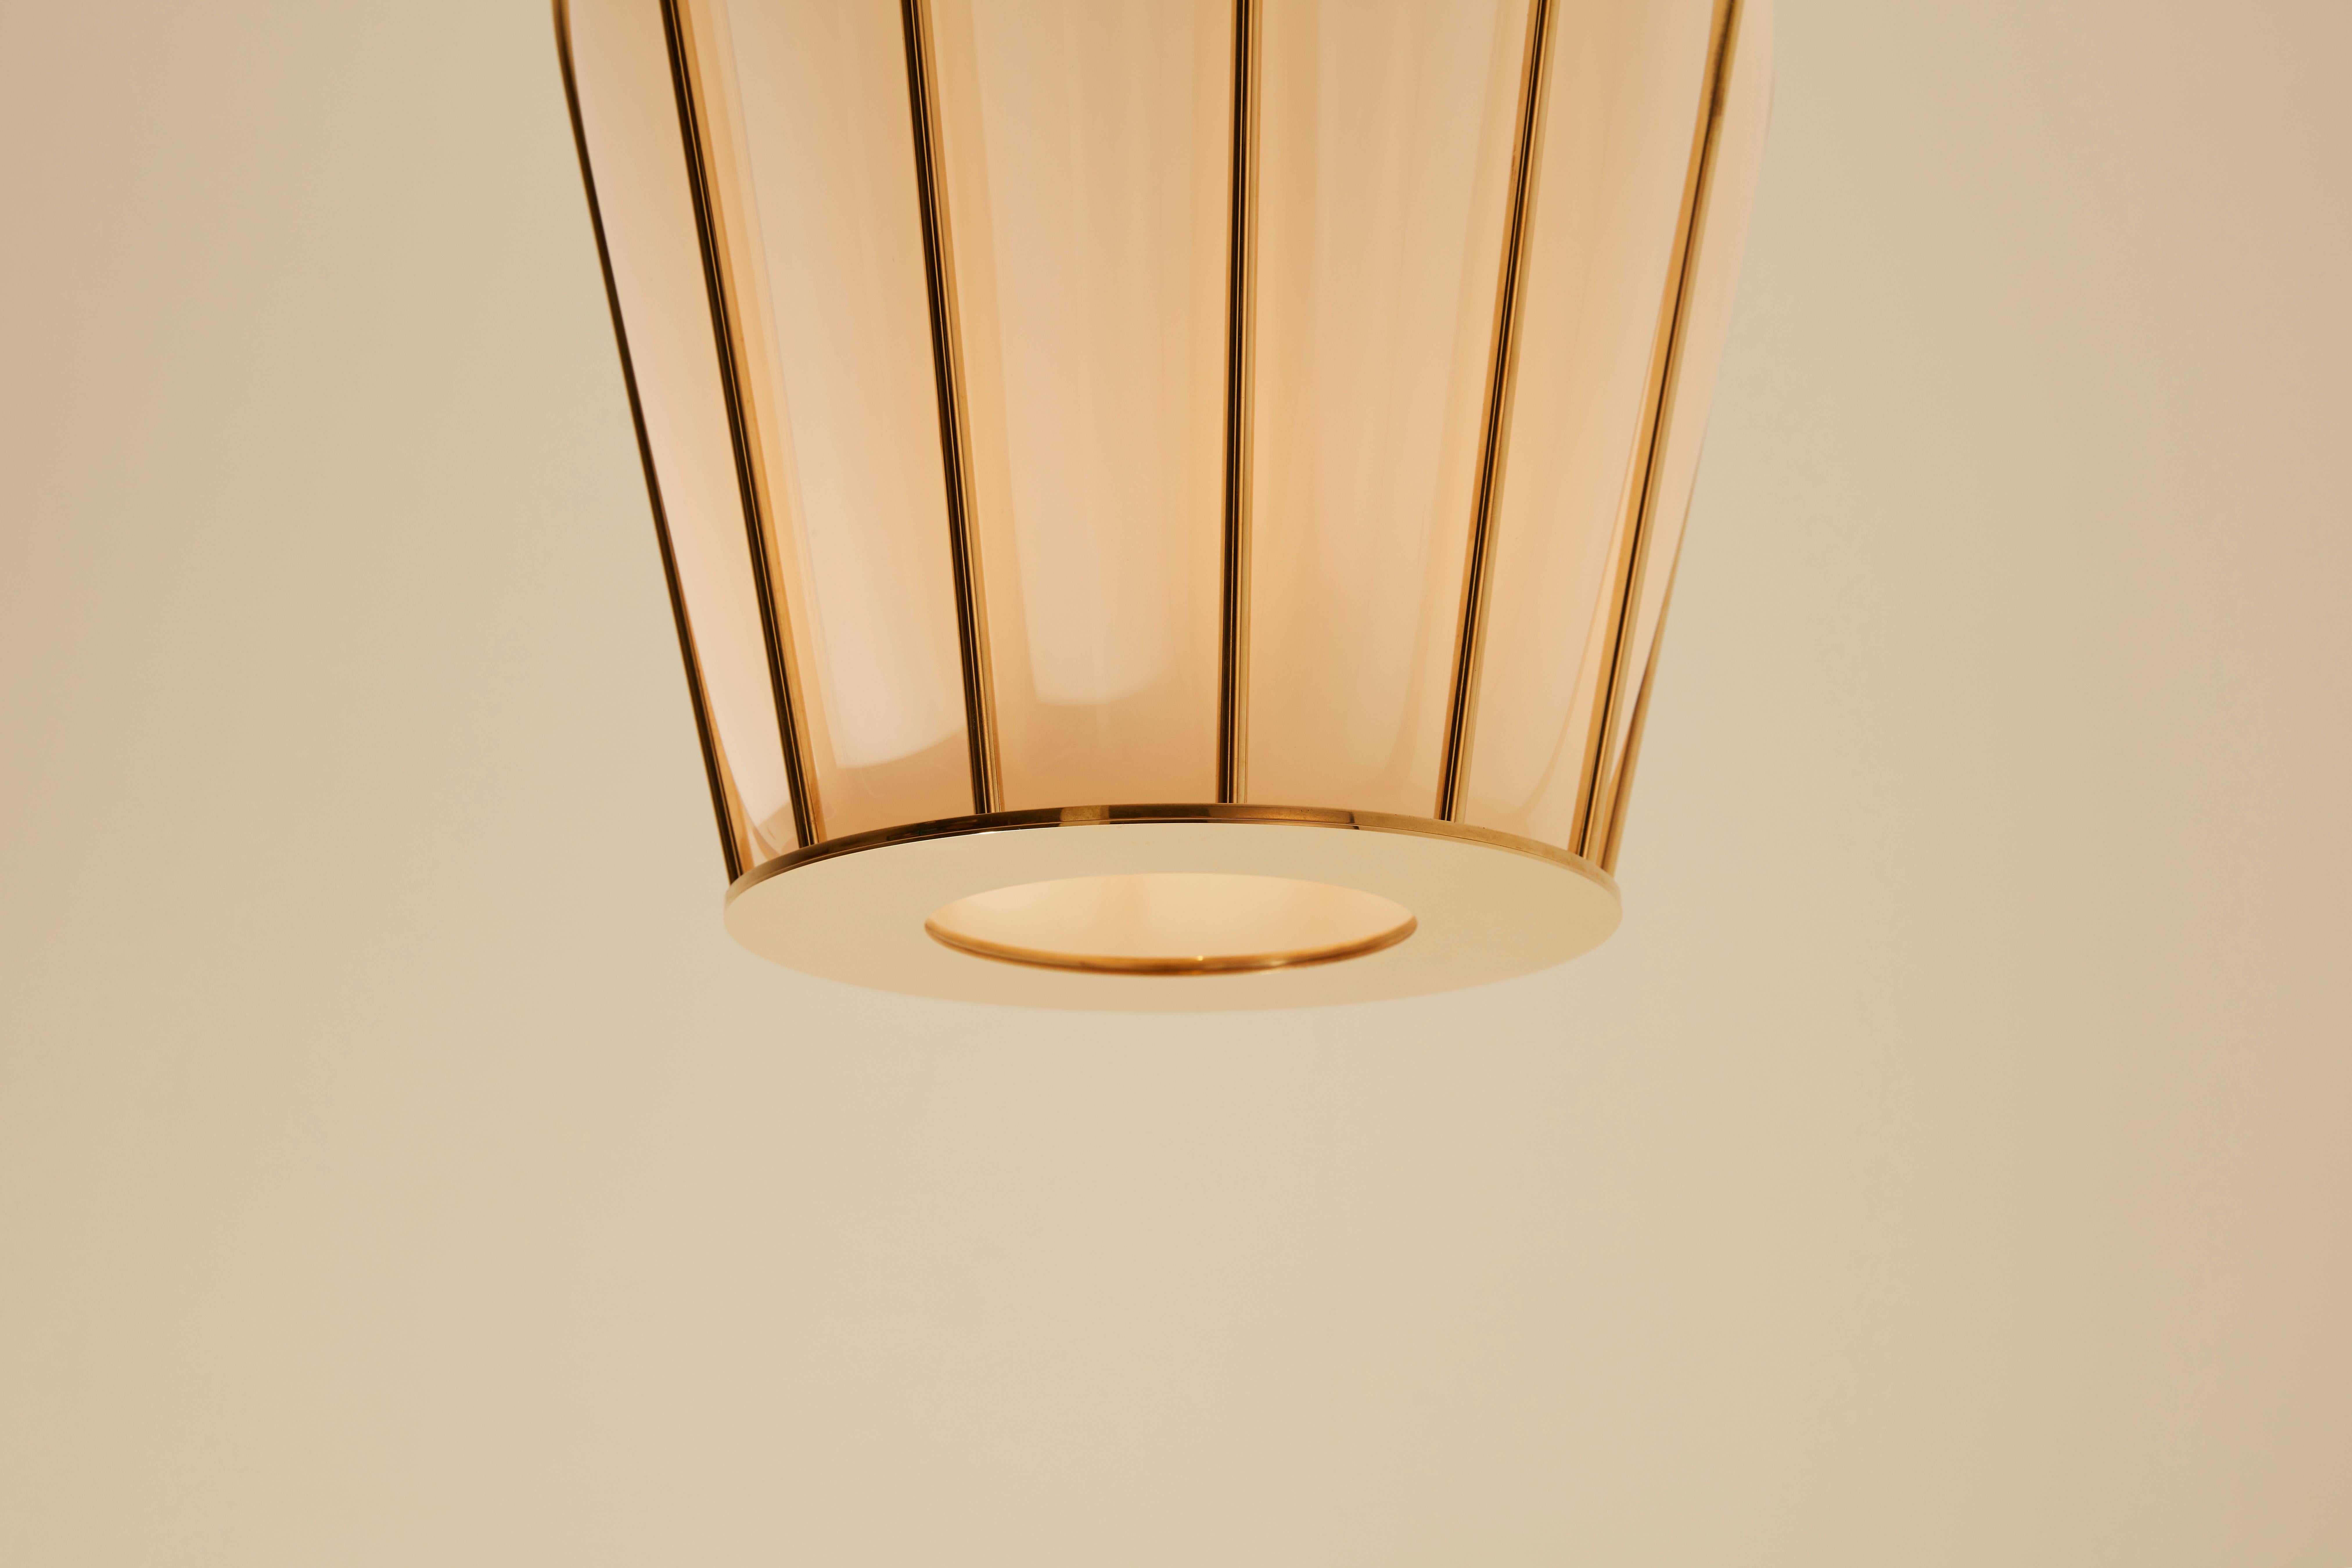 French Sky Lantern Pendant Light by Mydriaz